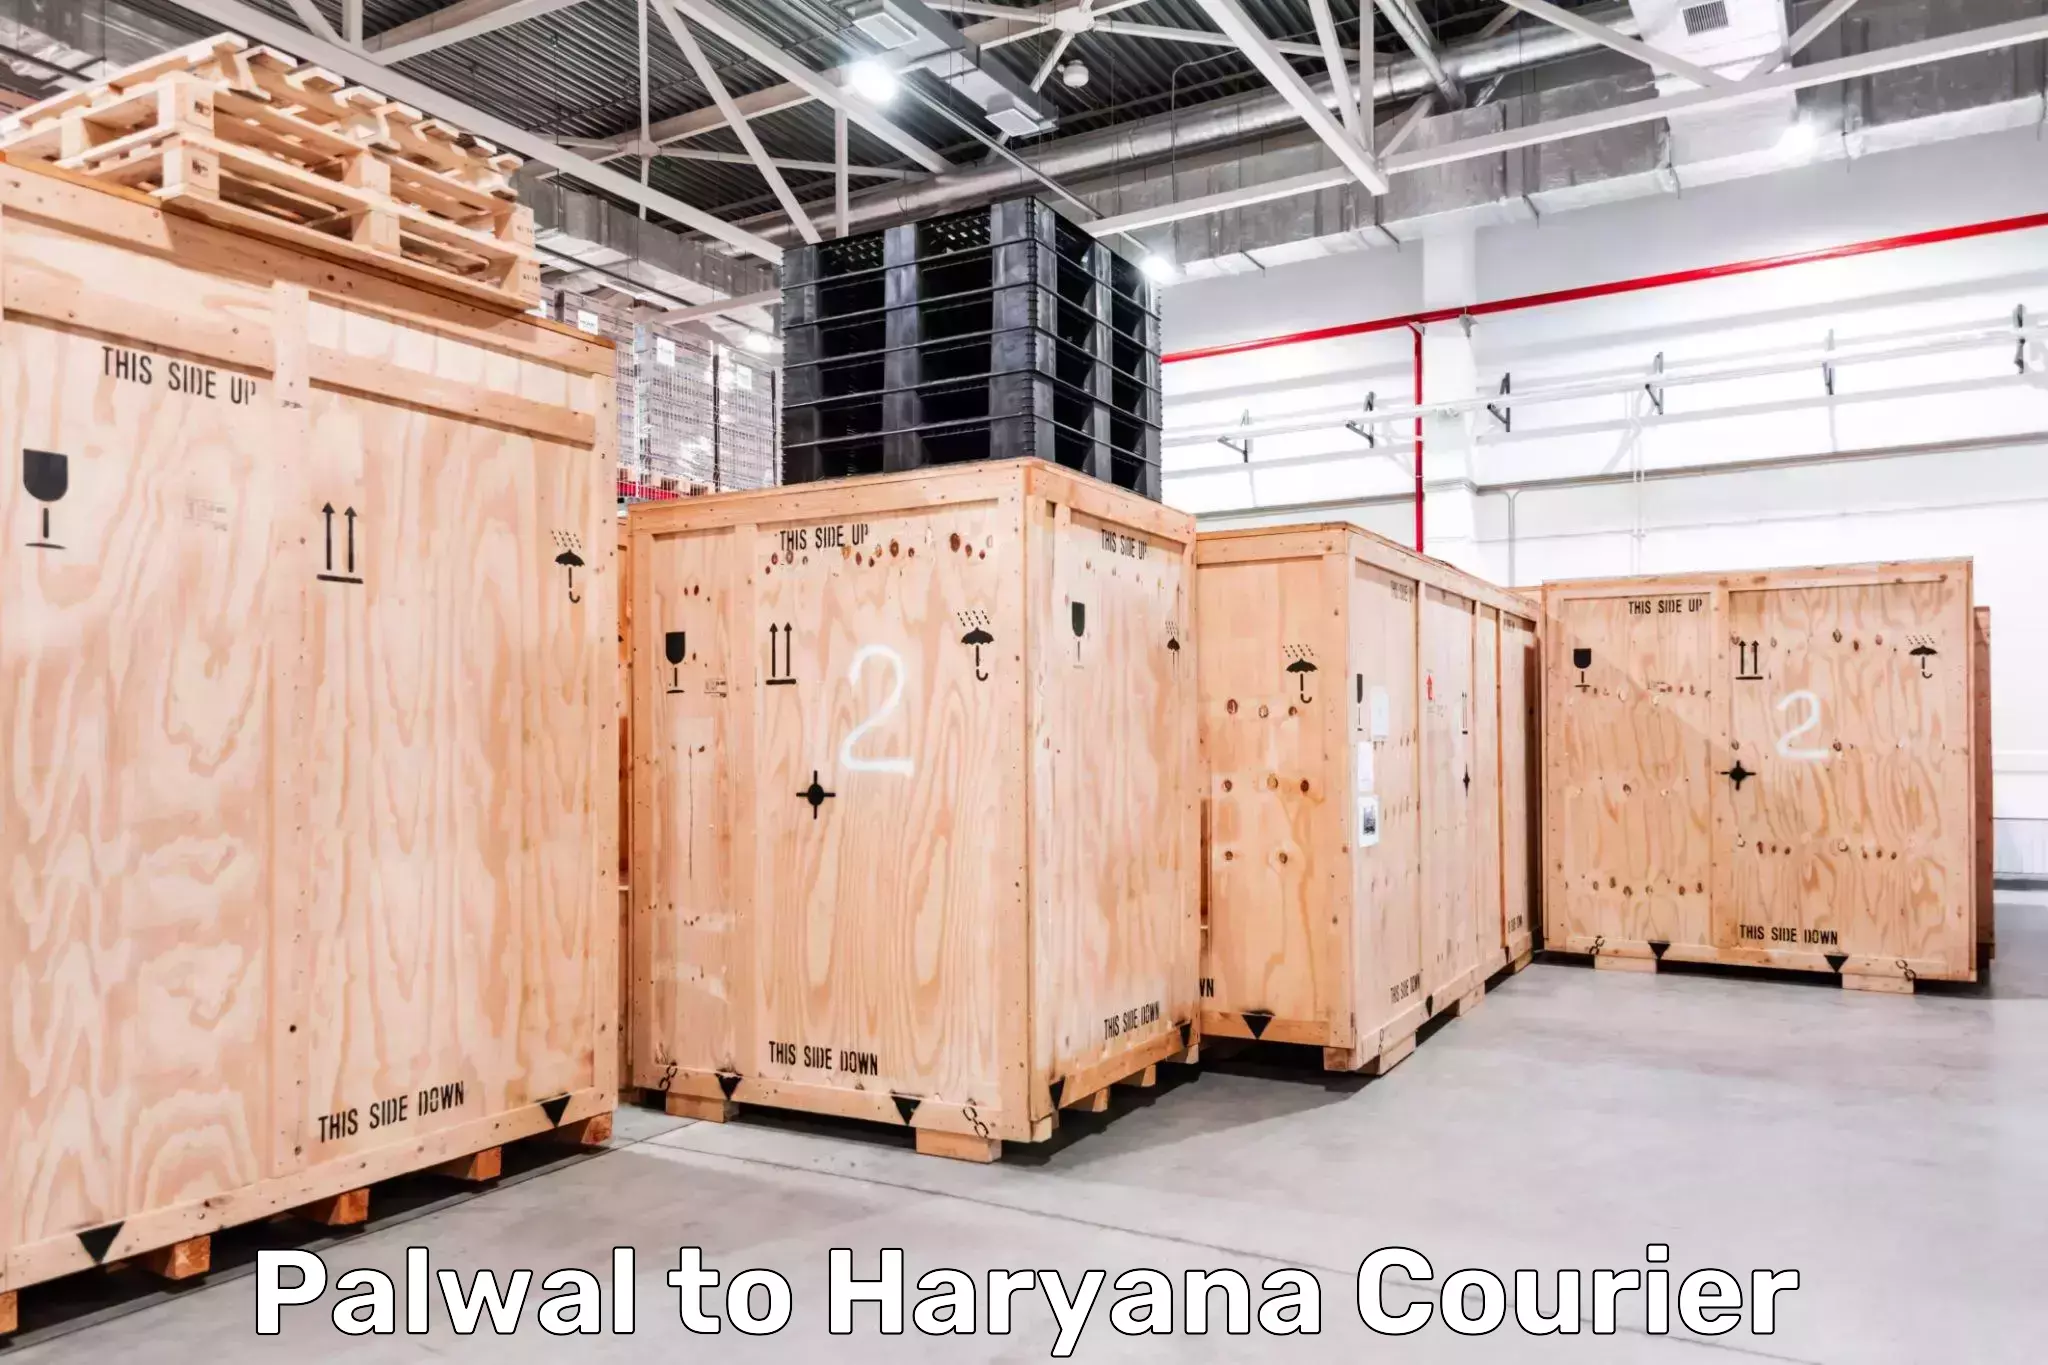 Advanced shipping technology Palwal to Karnal